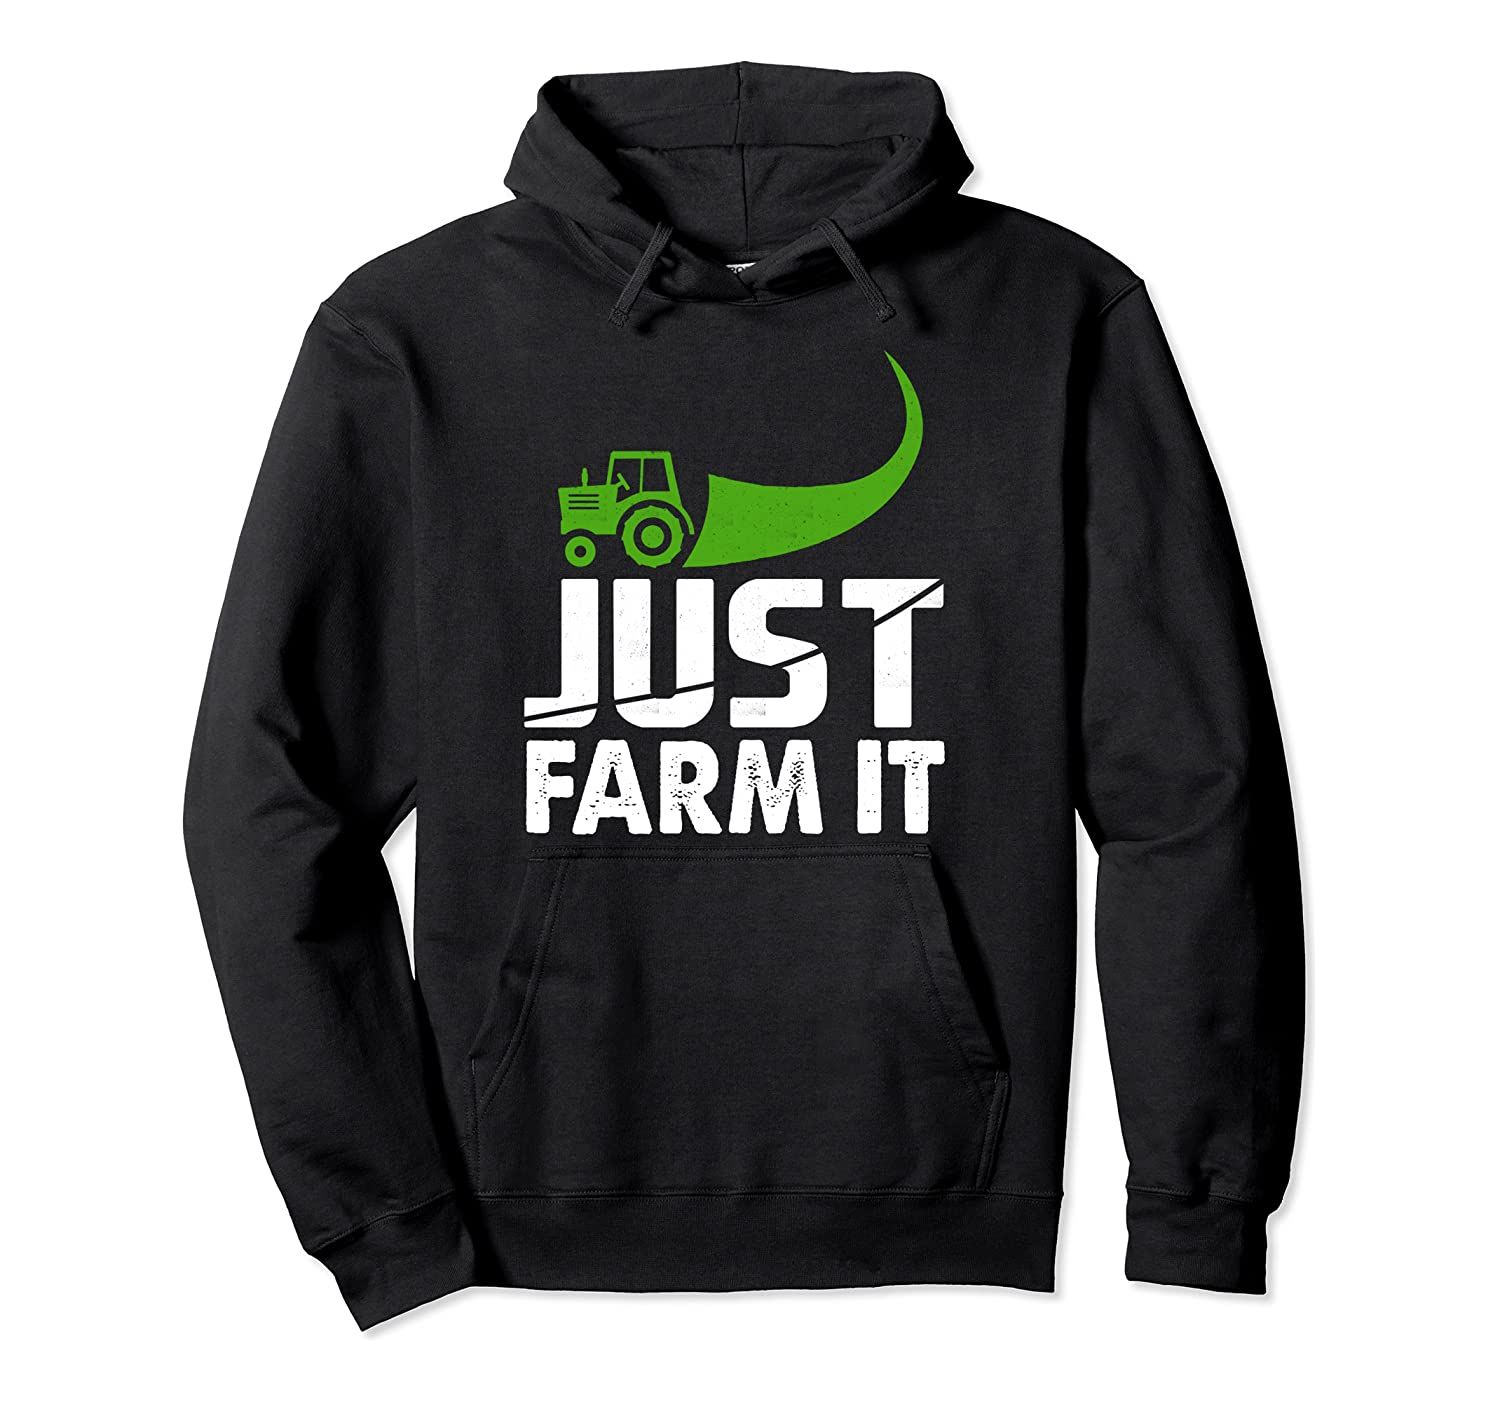 Just Farm It! Funny Farming Tractor Pullover Hoodie, T-Shirt, Sweatshirt